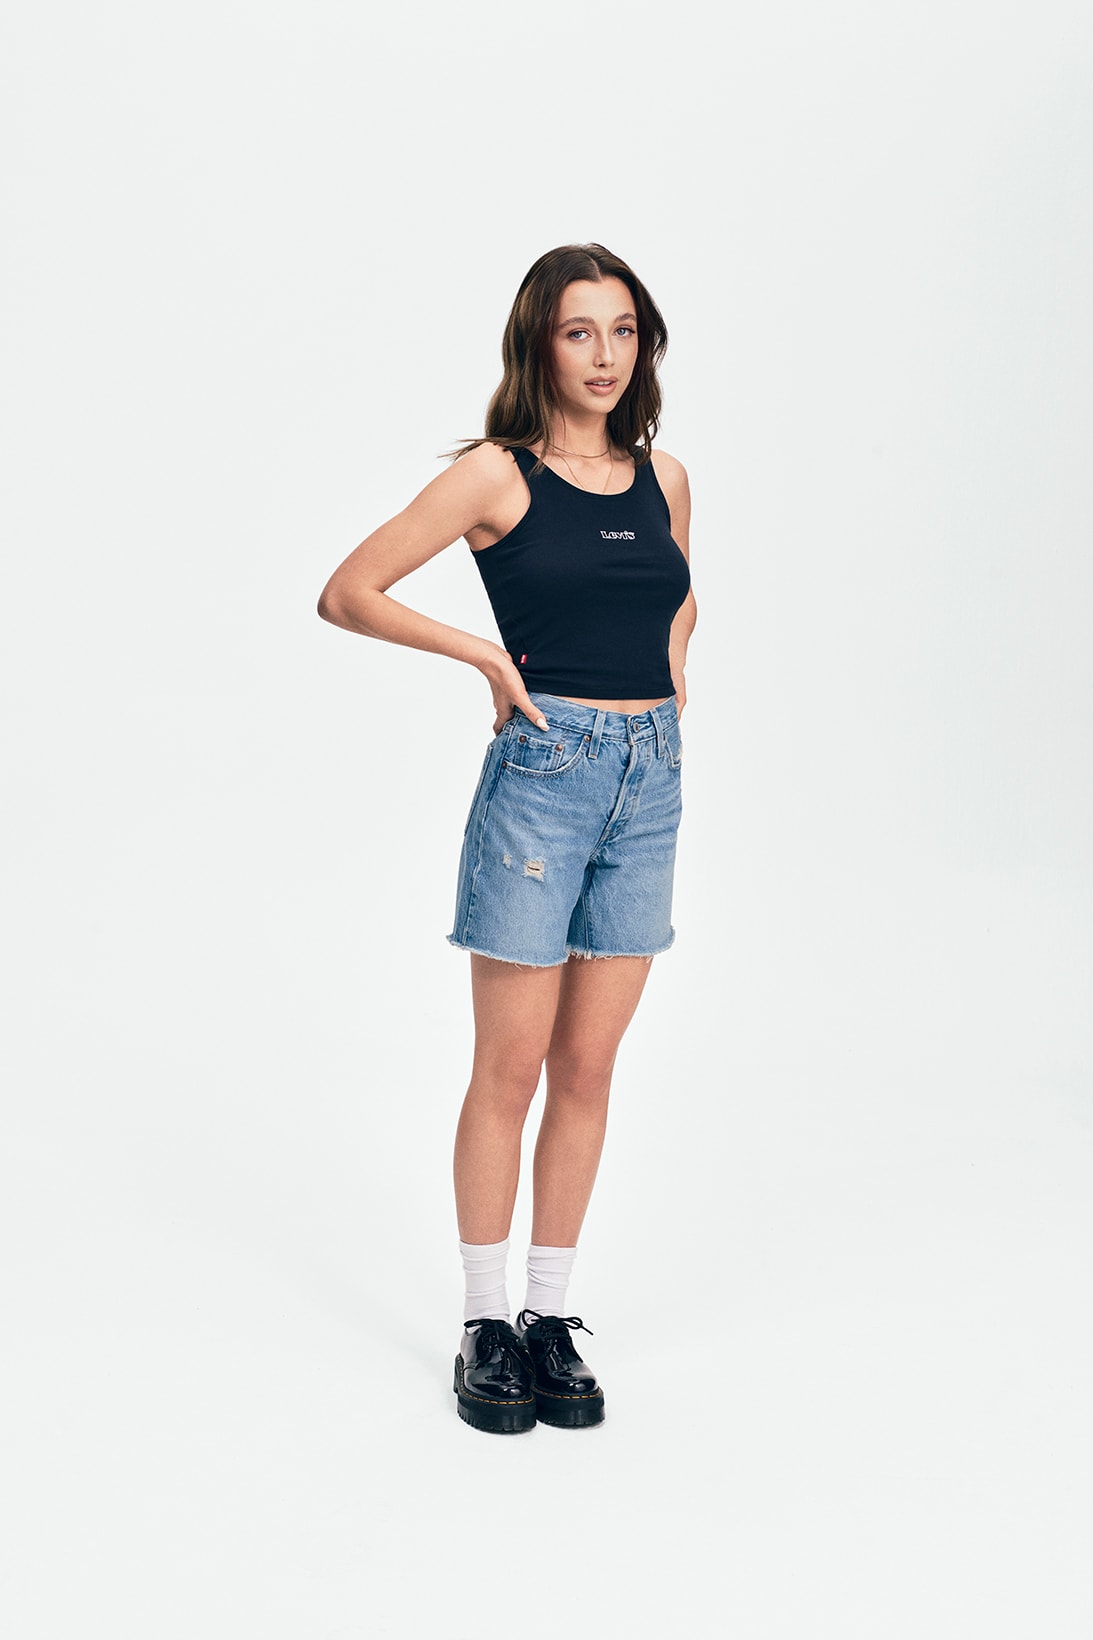 Levi's 501 Originals Jeans Campaign Emma Chamberlain Tank Top Shorts